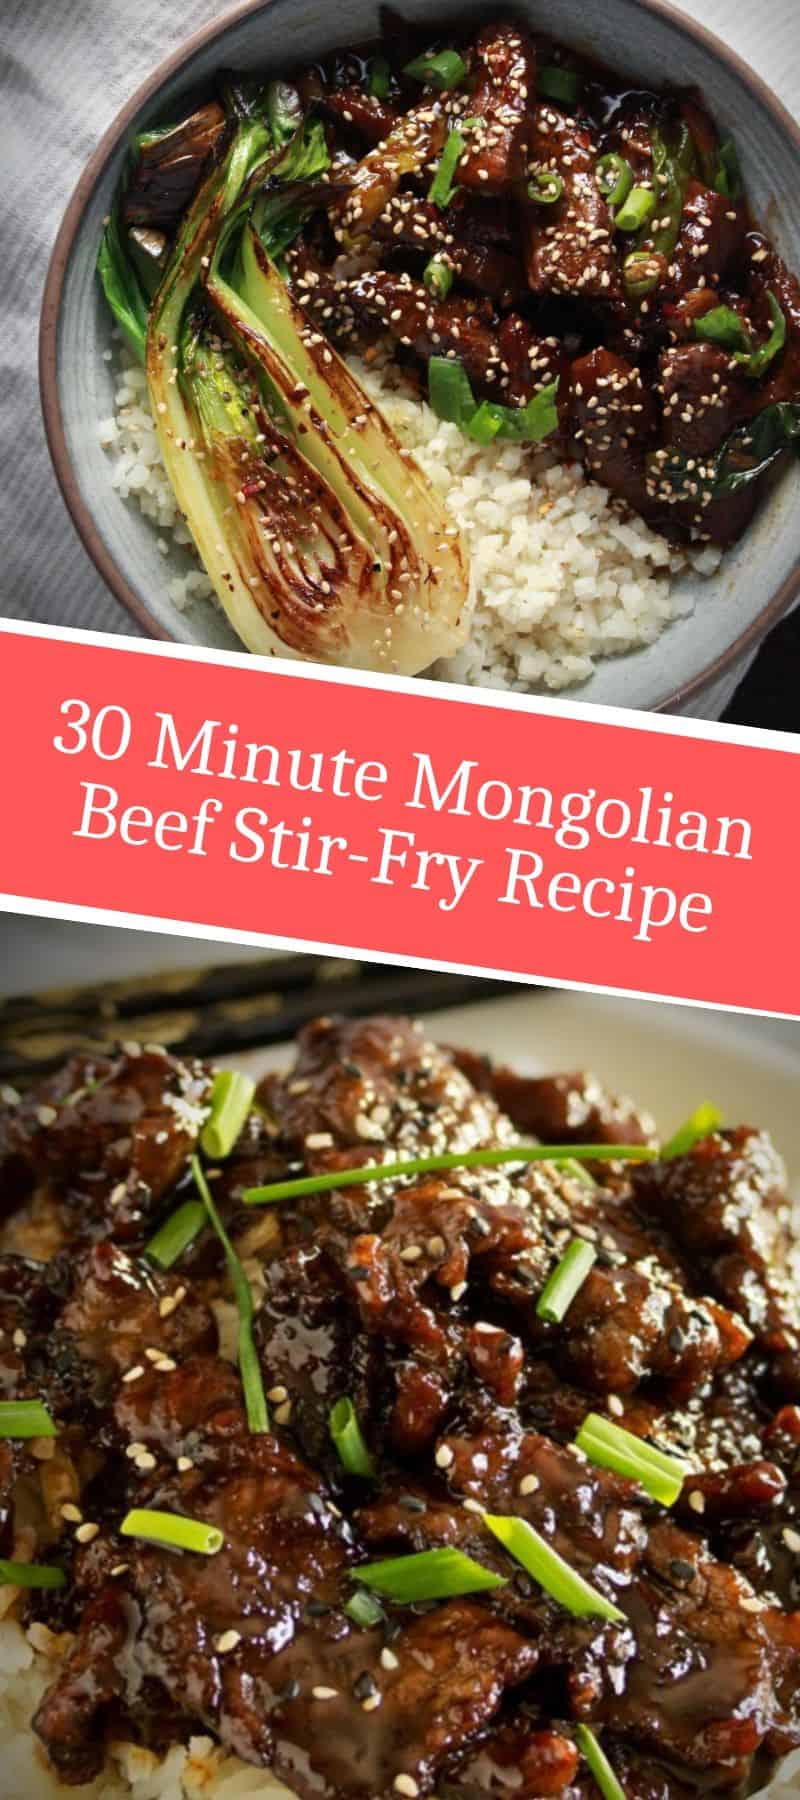 30 Minute Mongolian Beef Stir-Fry Recipe 3